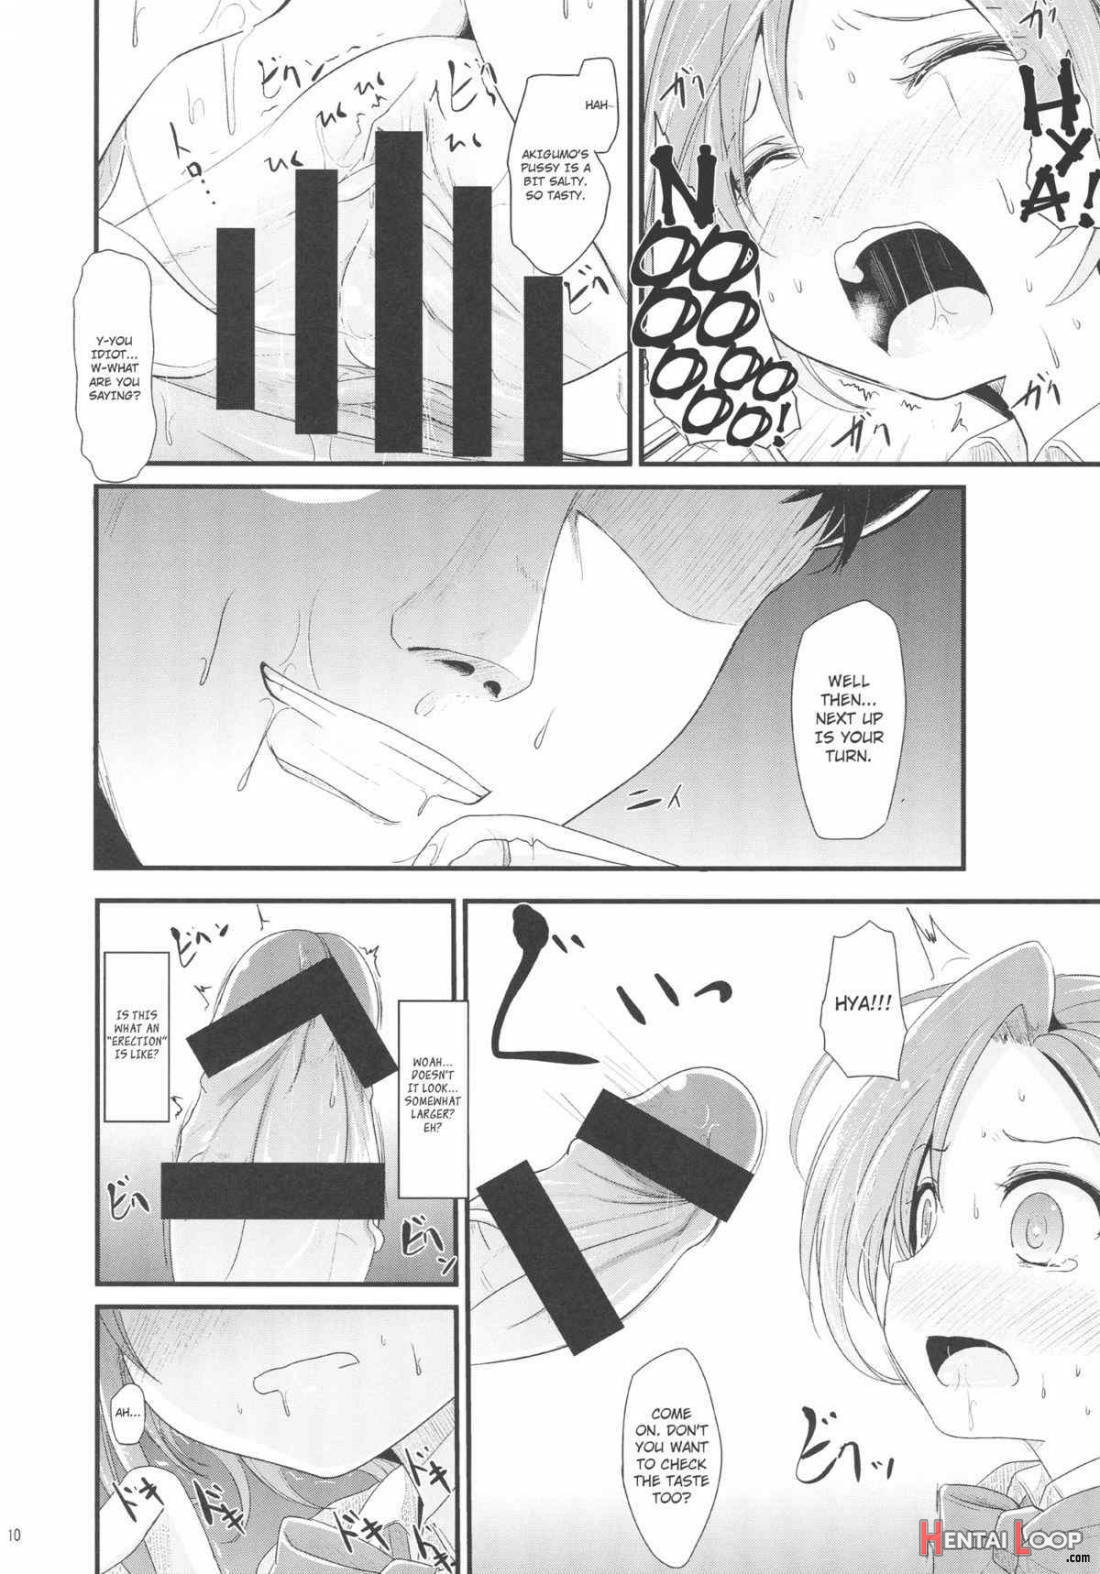 Akigumo-chance page 9